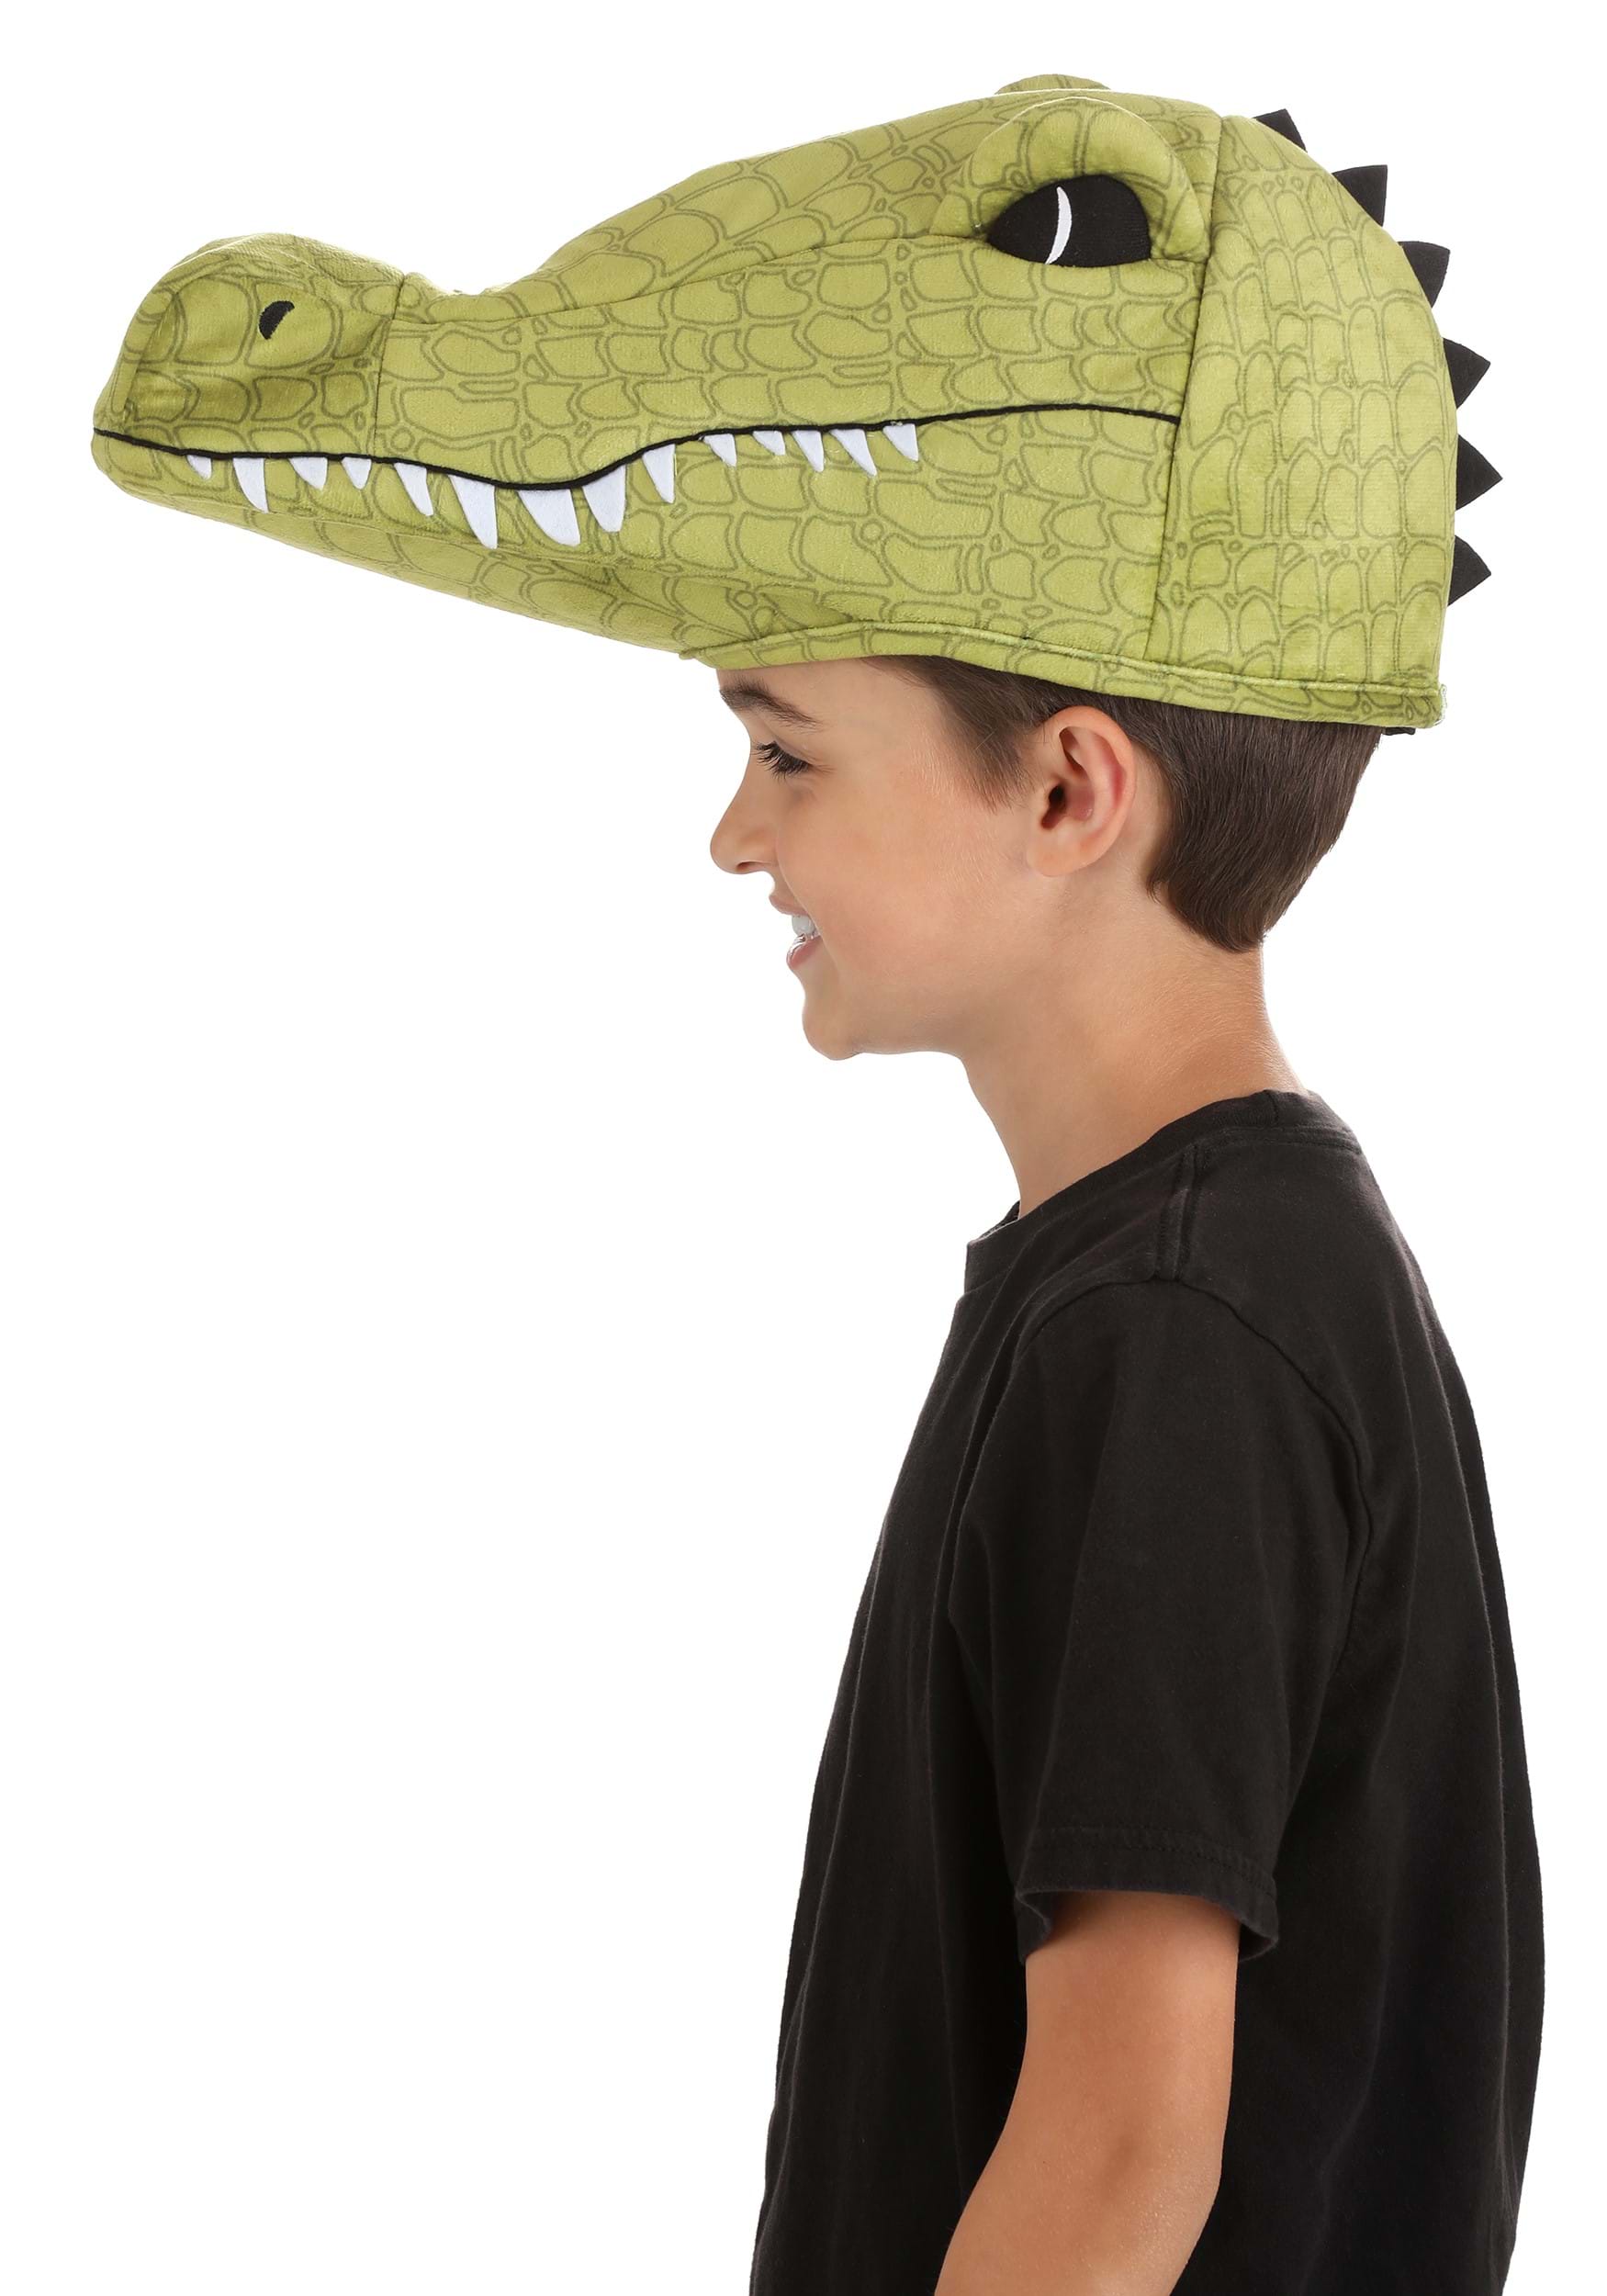 Alligator Plush Costume Hat , Animal Hats